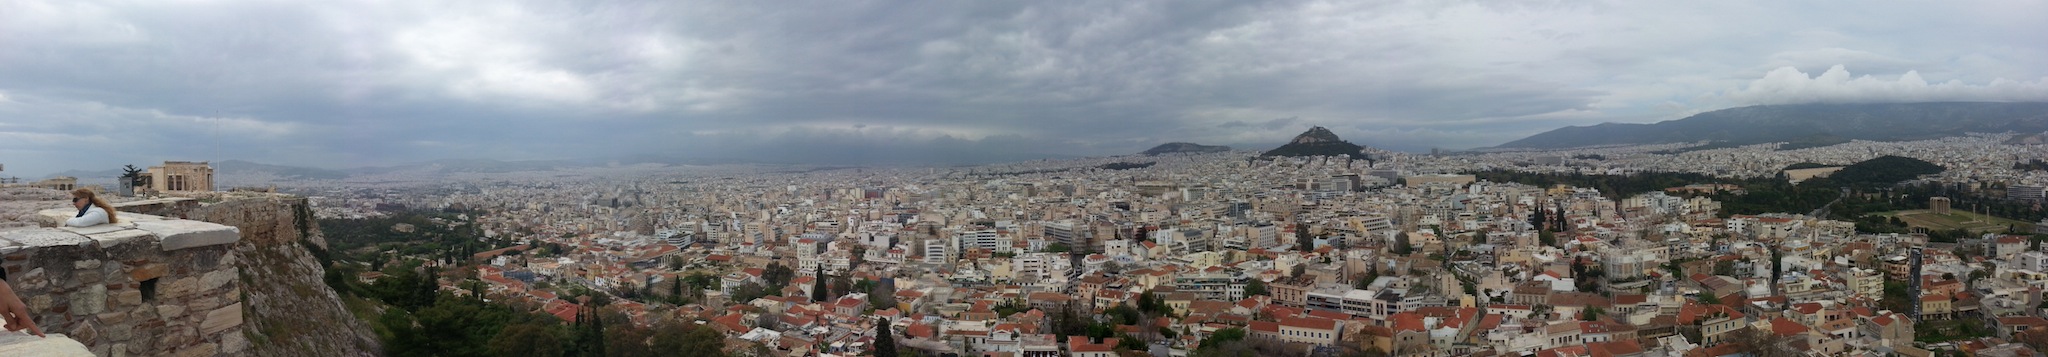 Athens2.jpg